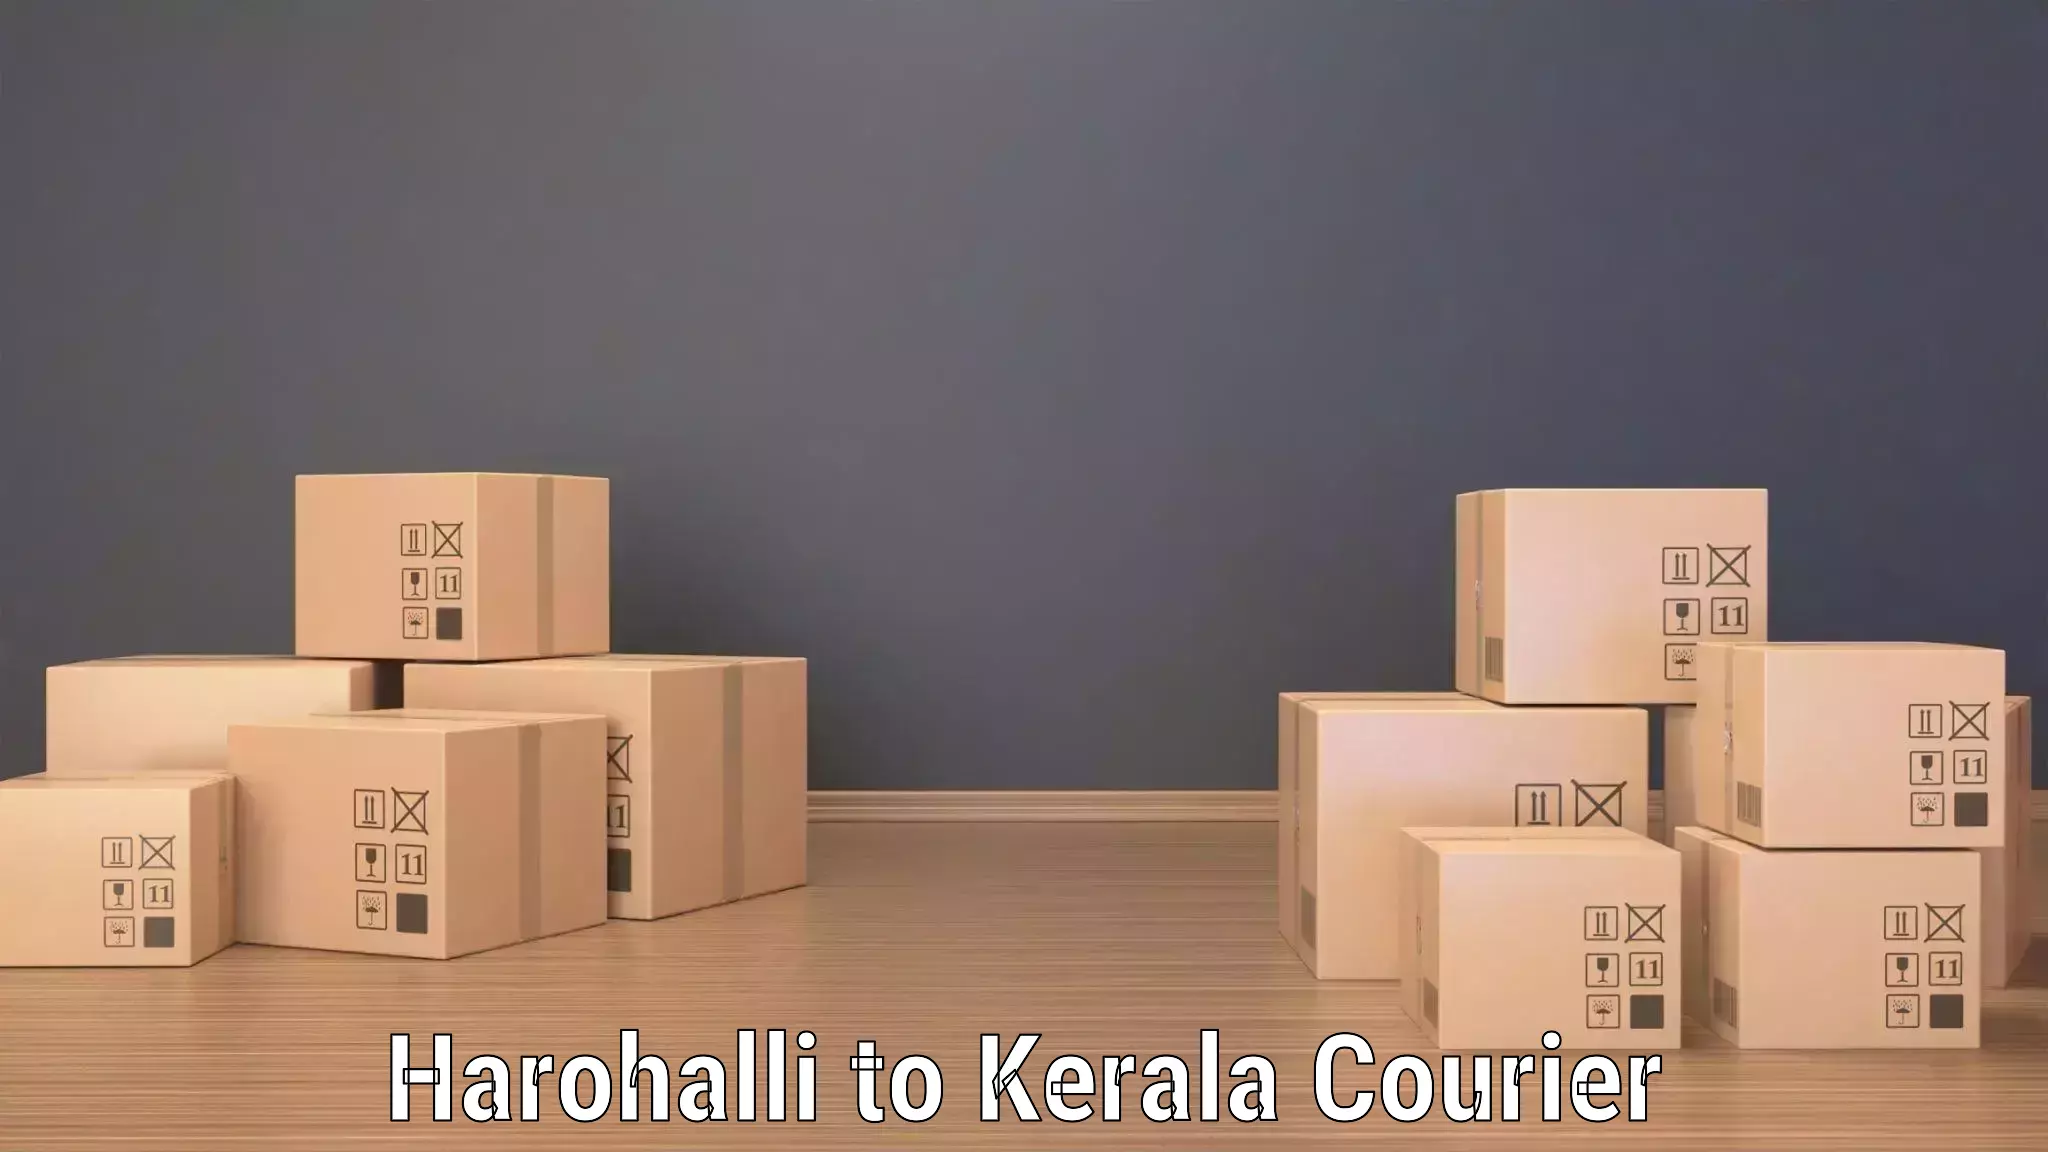 Express delivery capabilities Harohalli to Manjeshwar